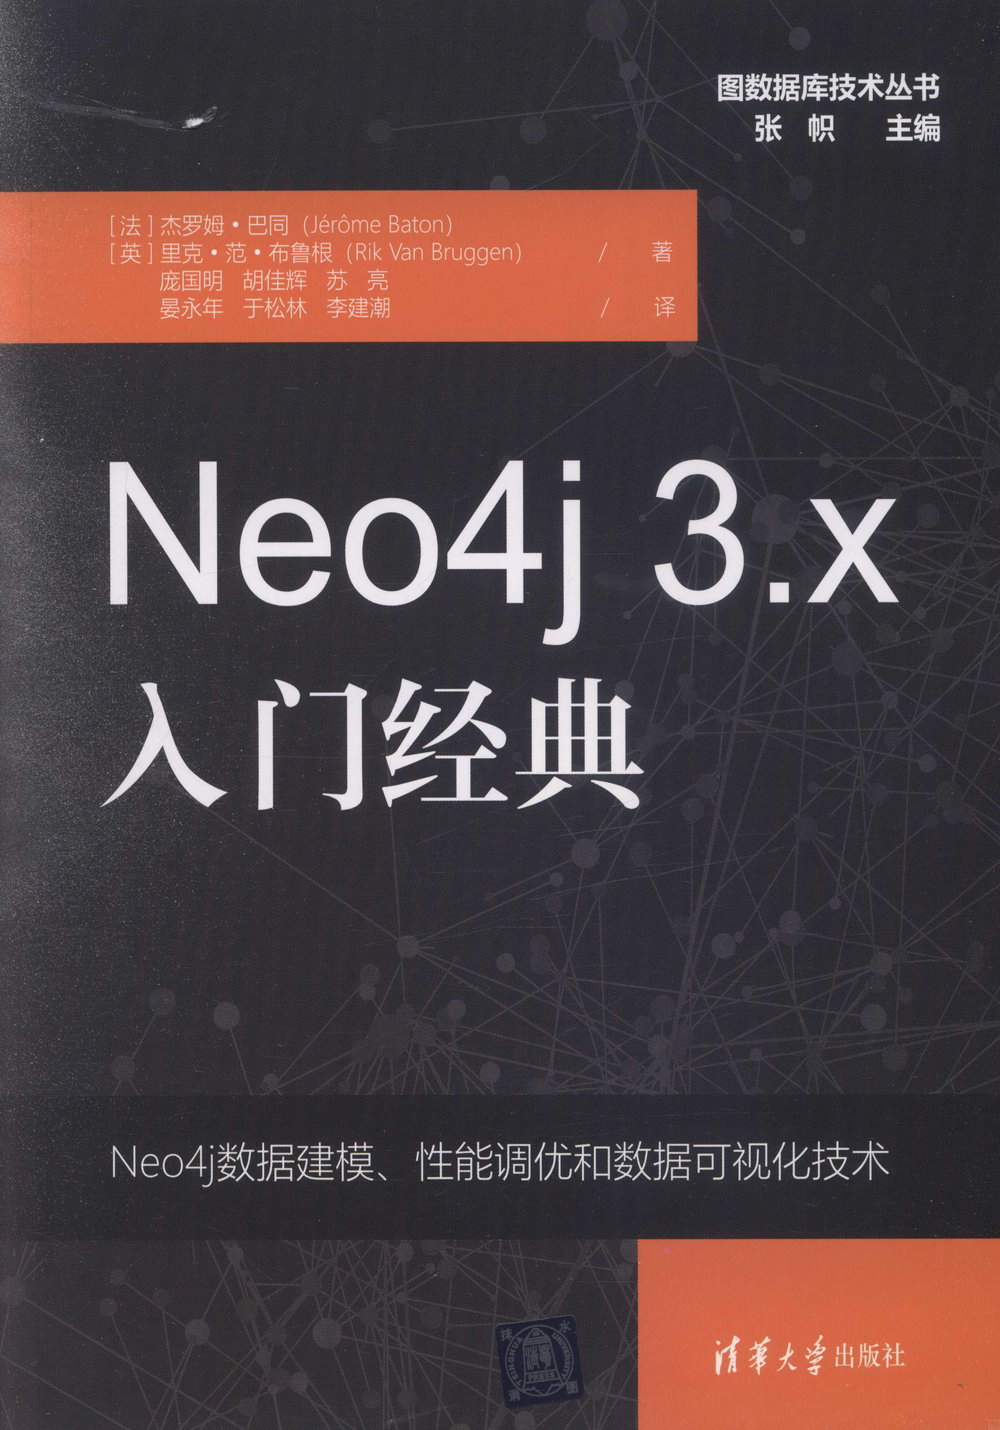 Neo4j 3.x入門經典